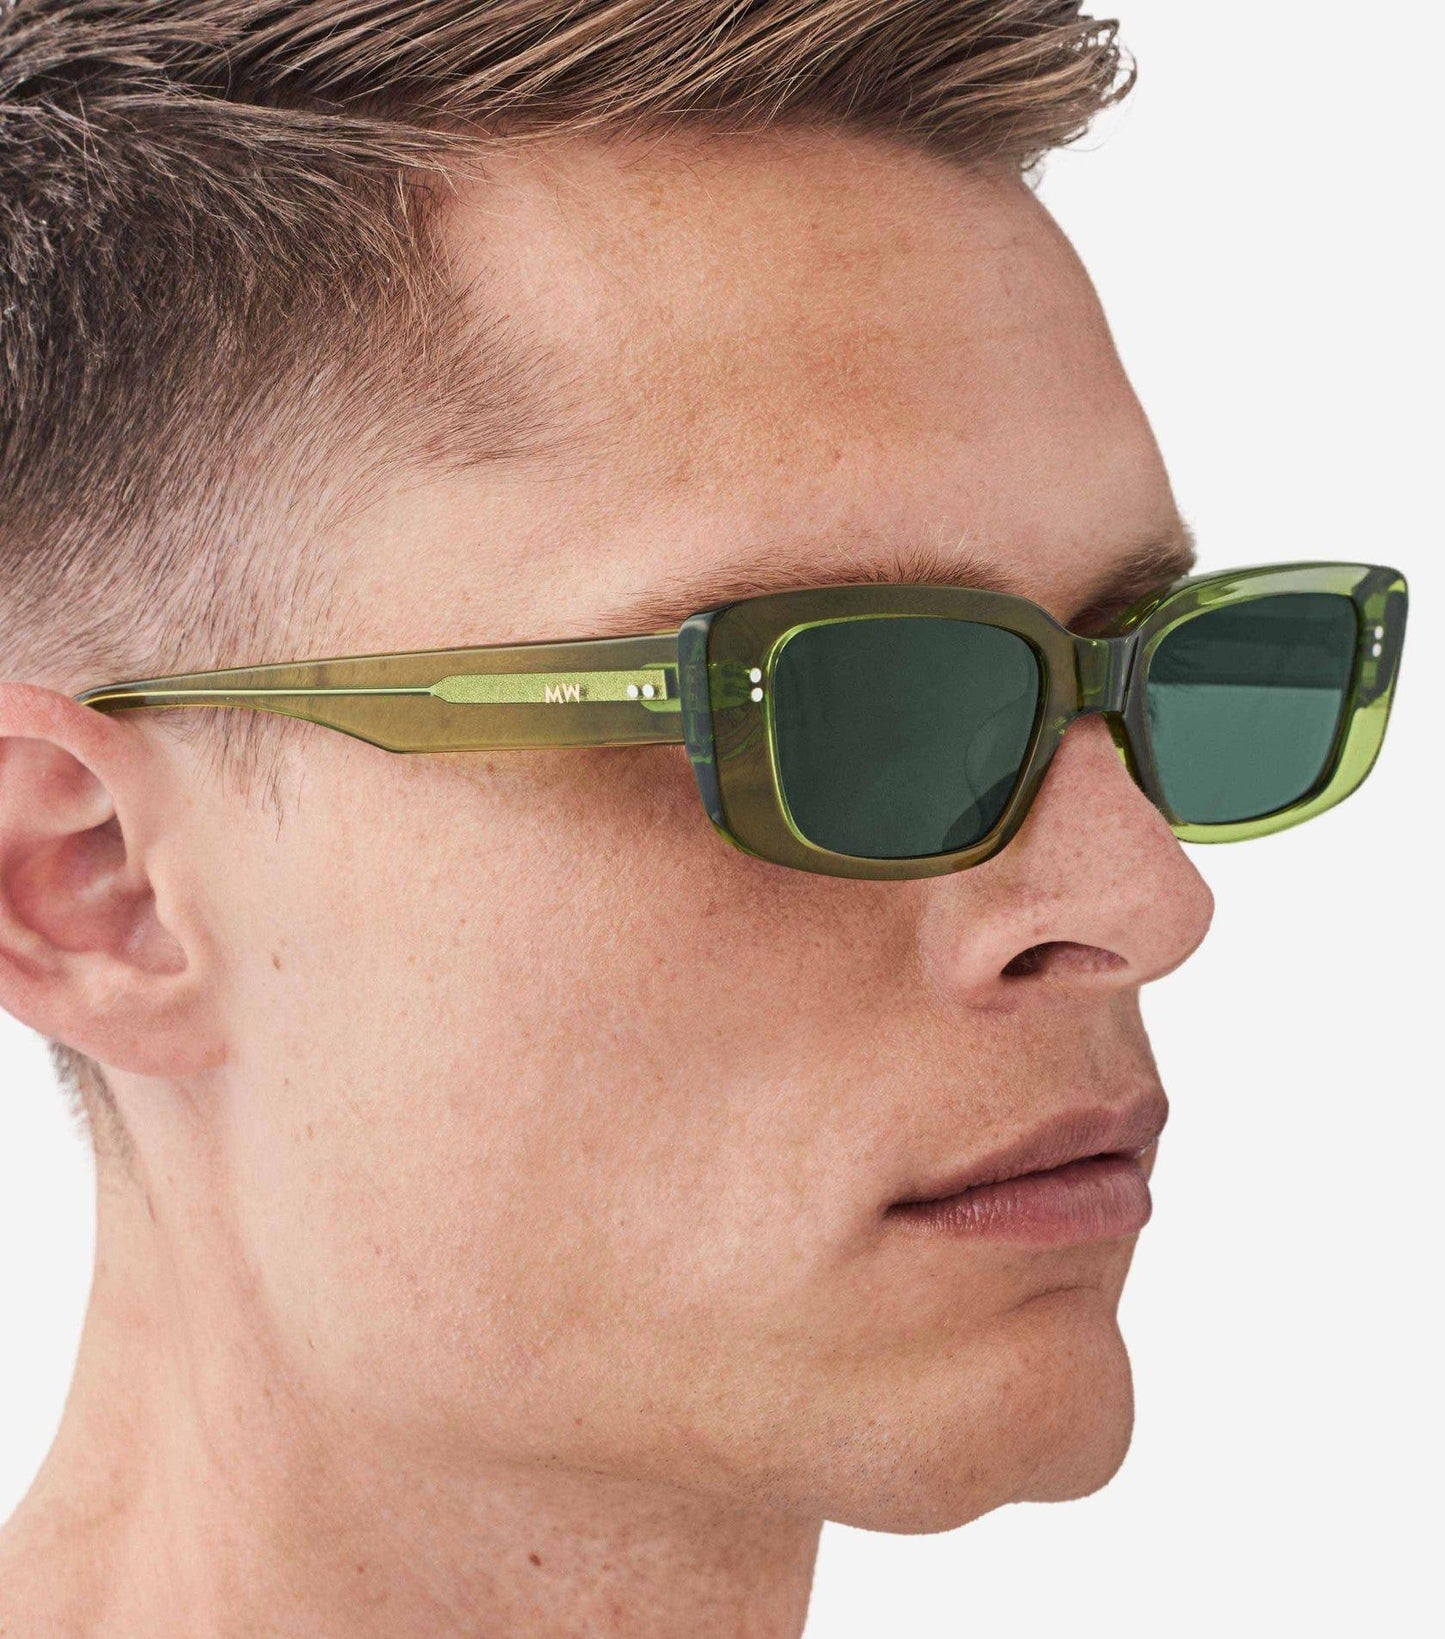 Grace, Rectagular sunglasses for men and women green lens UV400 protection